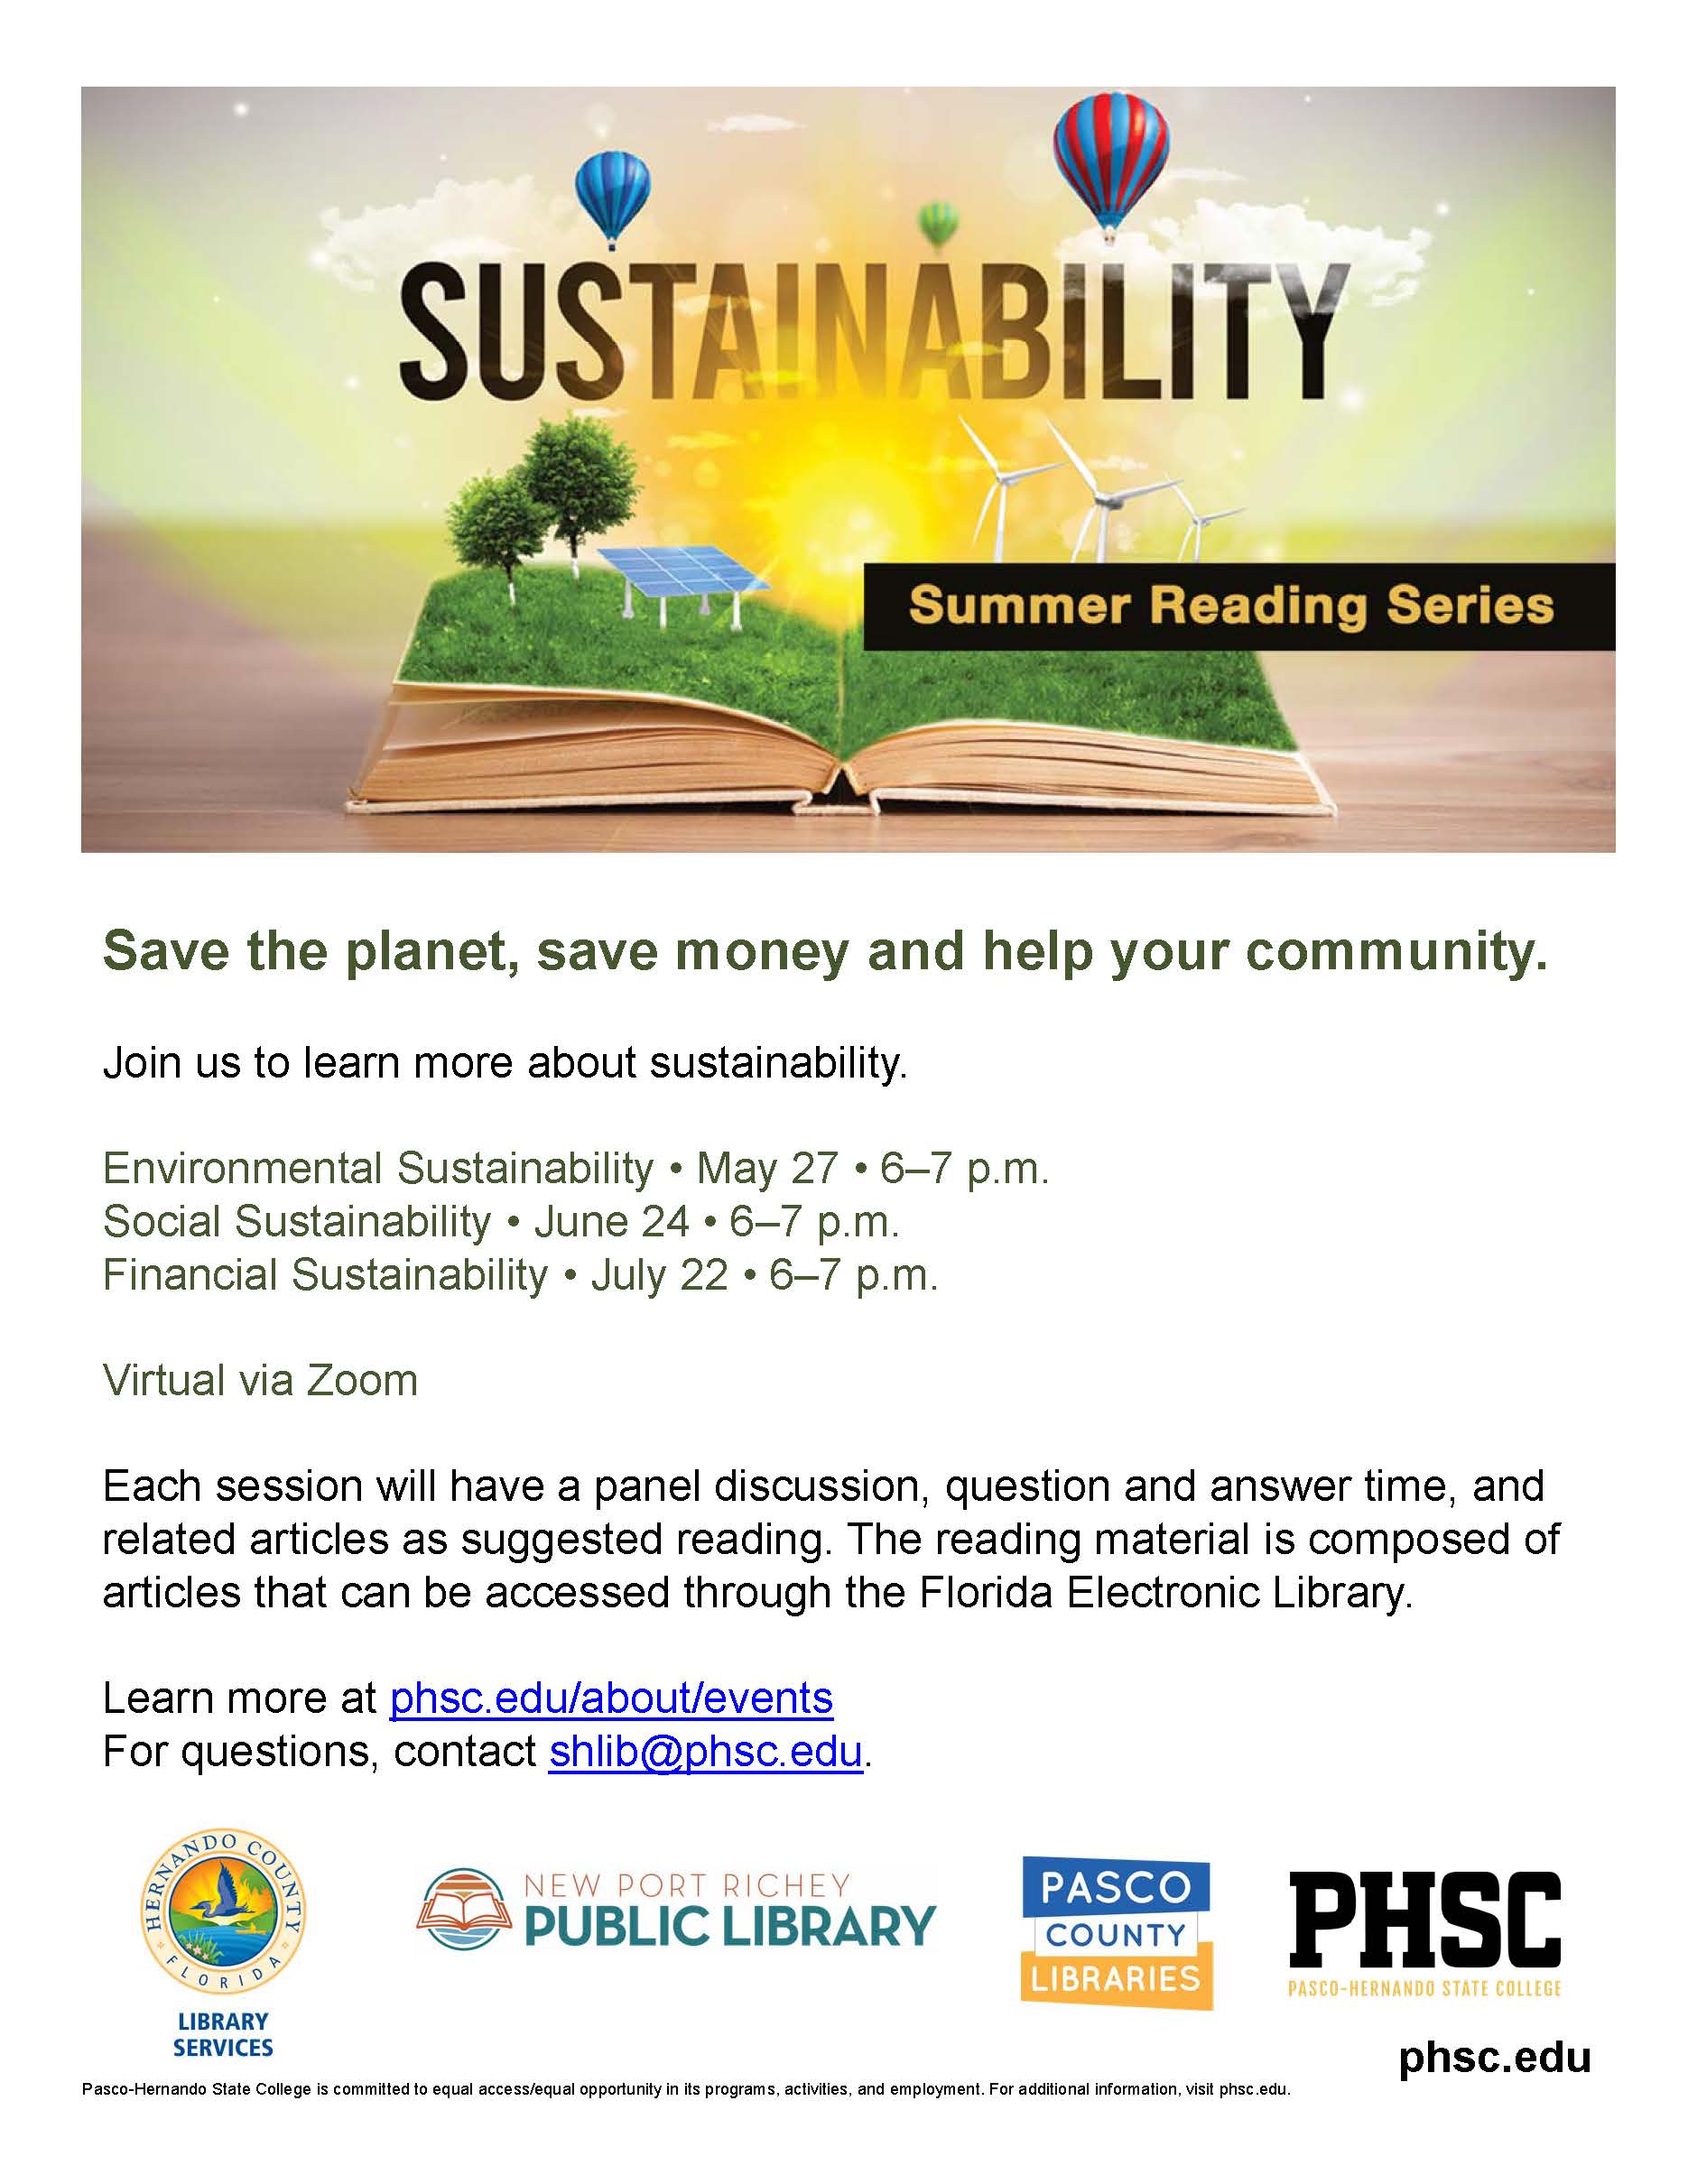 Sustainability flyer